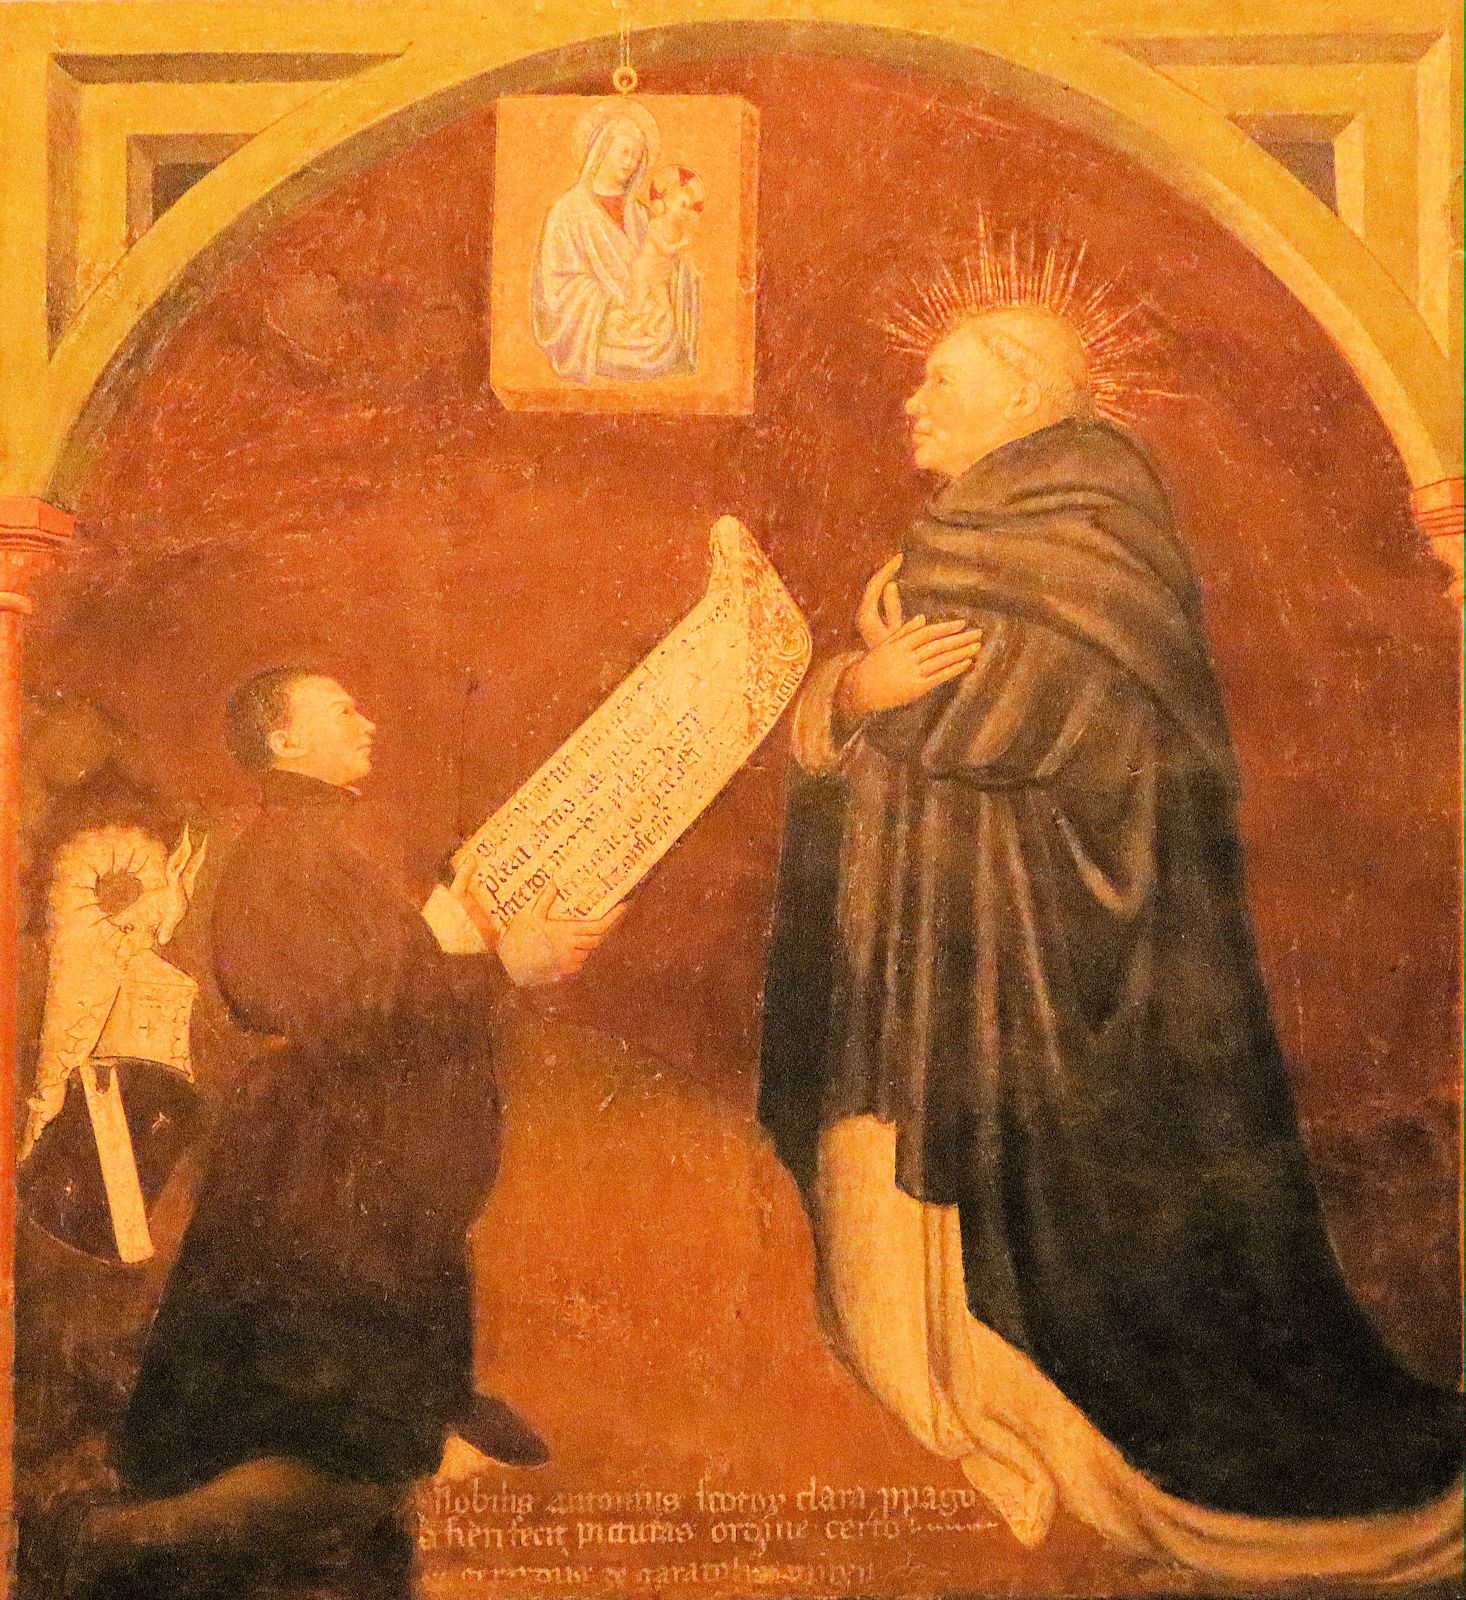 Gherardo Garattoli: Fresko, um 1405, in der Kirche San Giovanni in Canale in Piacenza